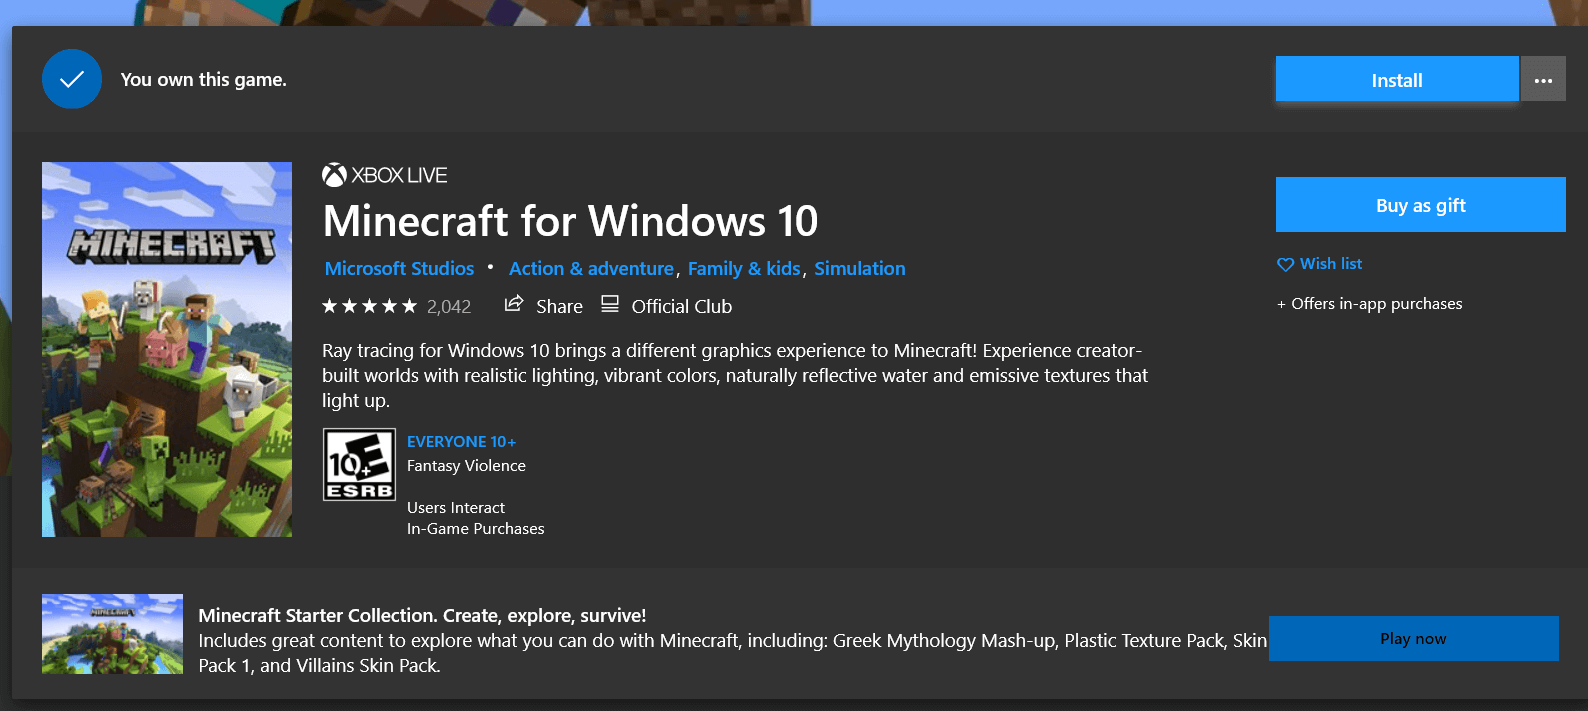 minecraft bedrock edition pc free download 1.18 windows 10